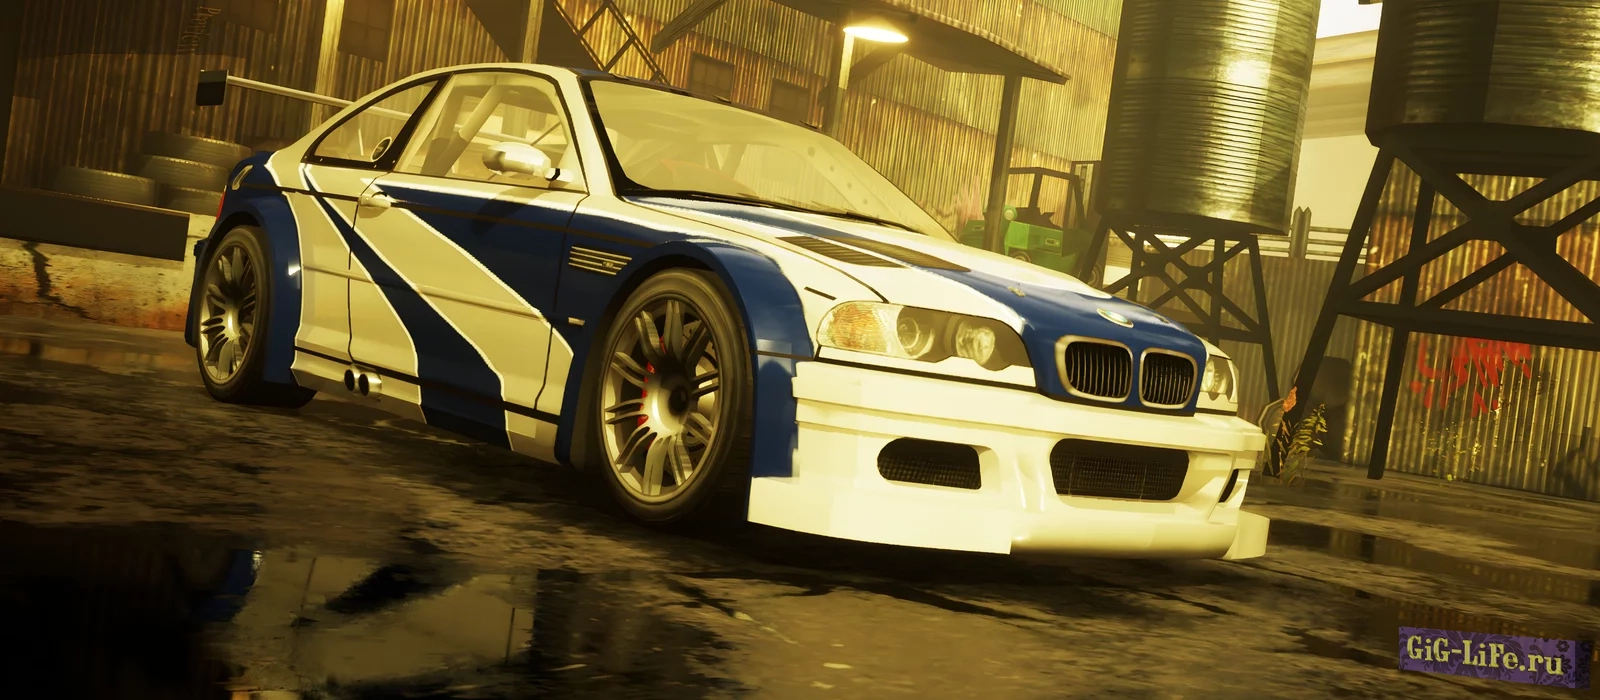 Need for Speed: Most Wanted — Графика на UE5 от YouTube-канала NostalgiaNexus